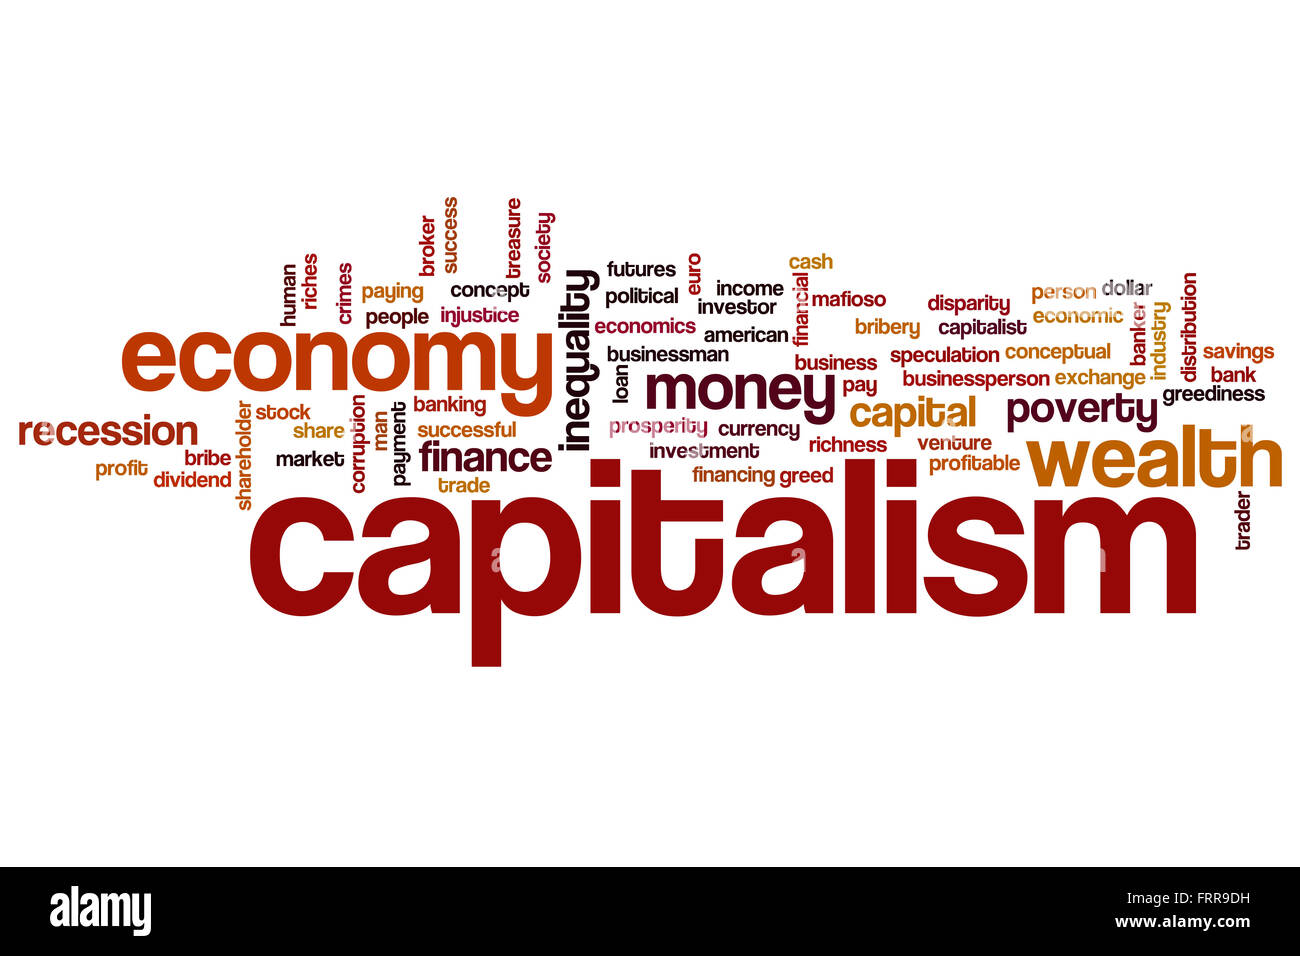 Capitalism word cloud concept Stock Photo